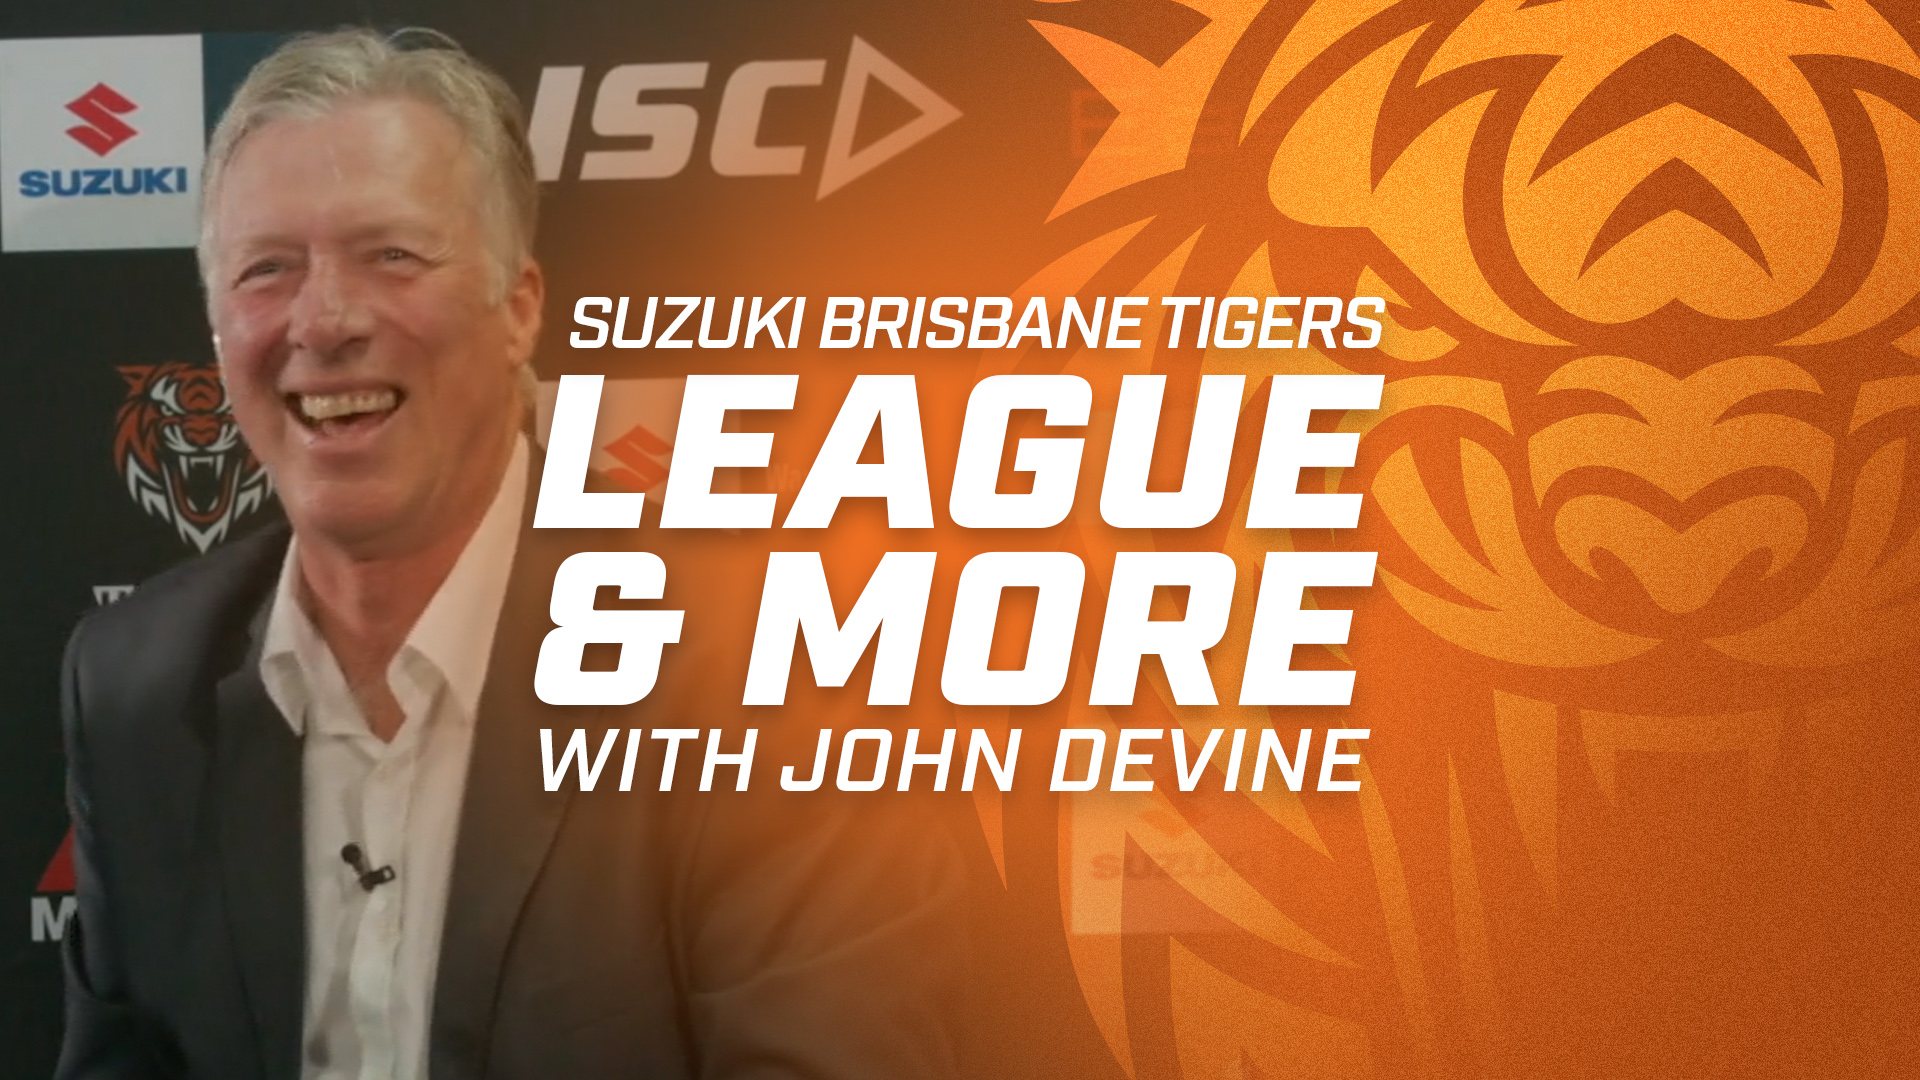 Brisbane Tigers League & More Episode 1 podcast cover